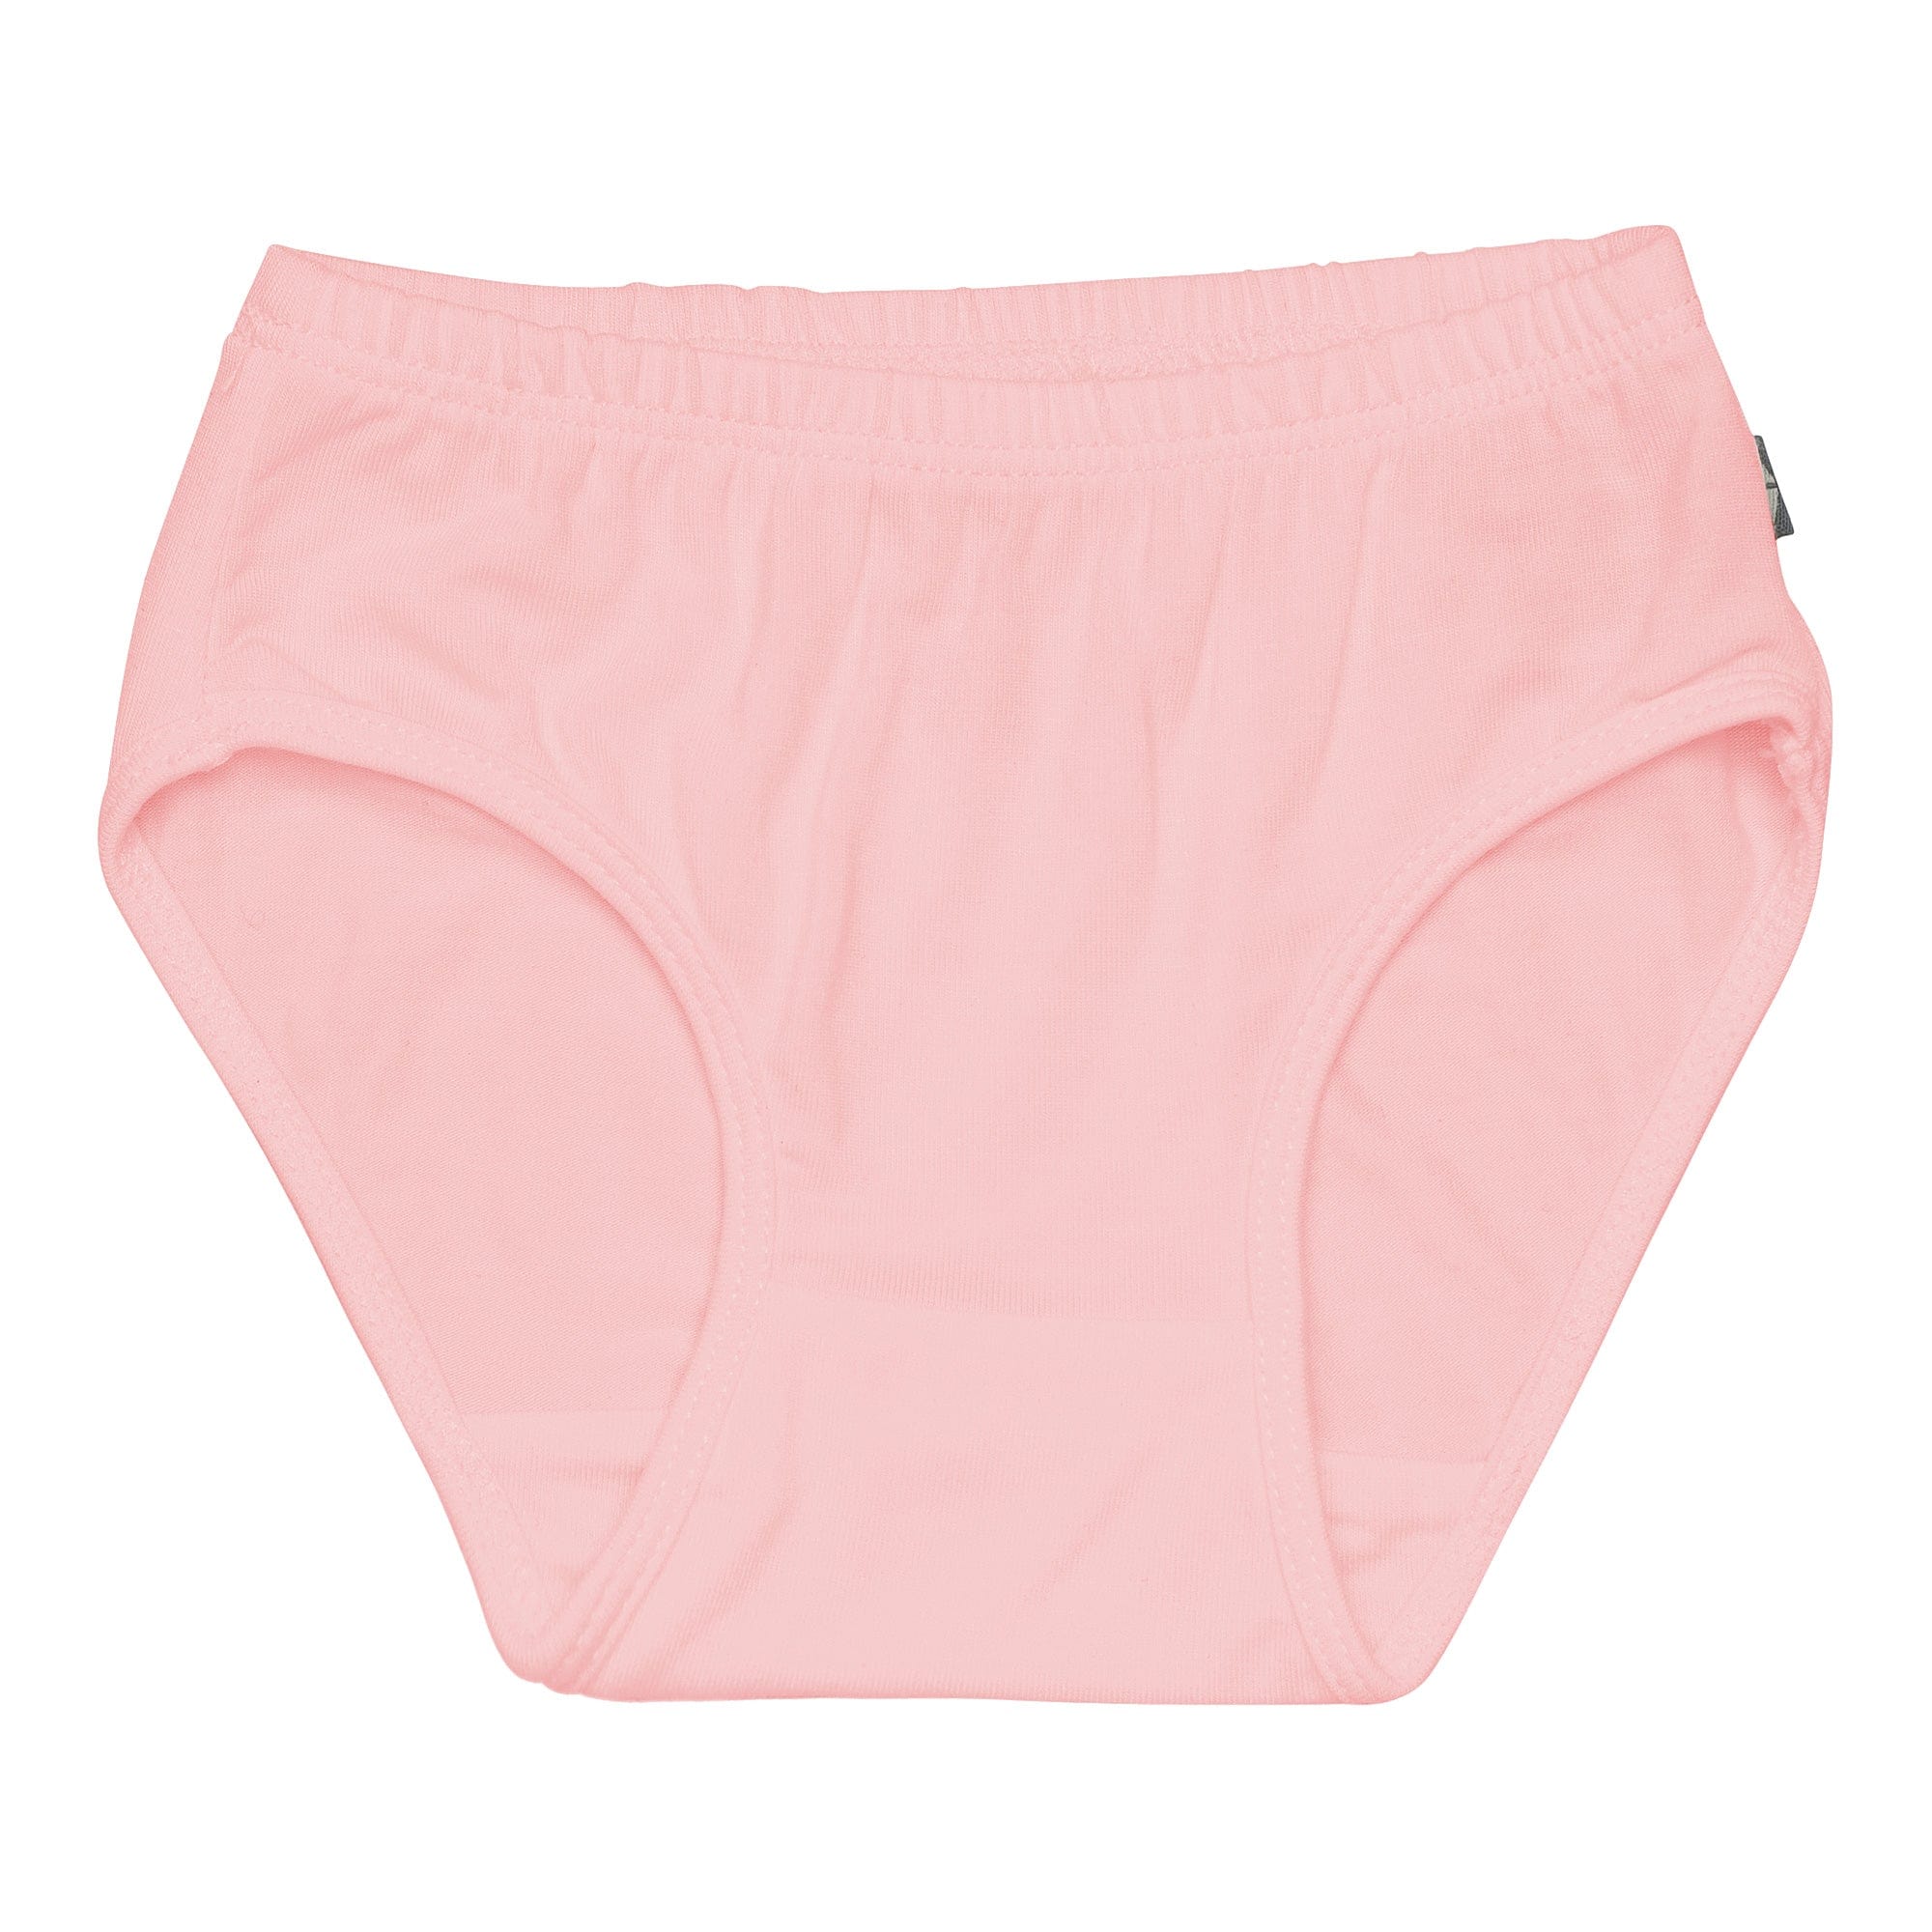 Kyte BABY Underwear Undies in Crepe